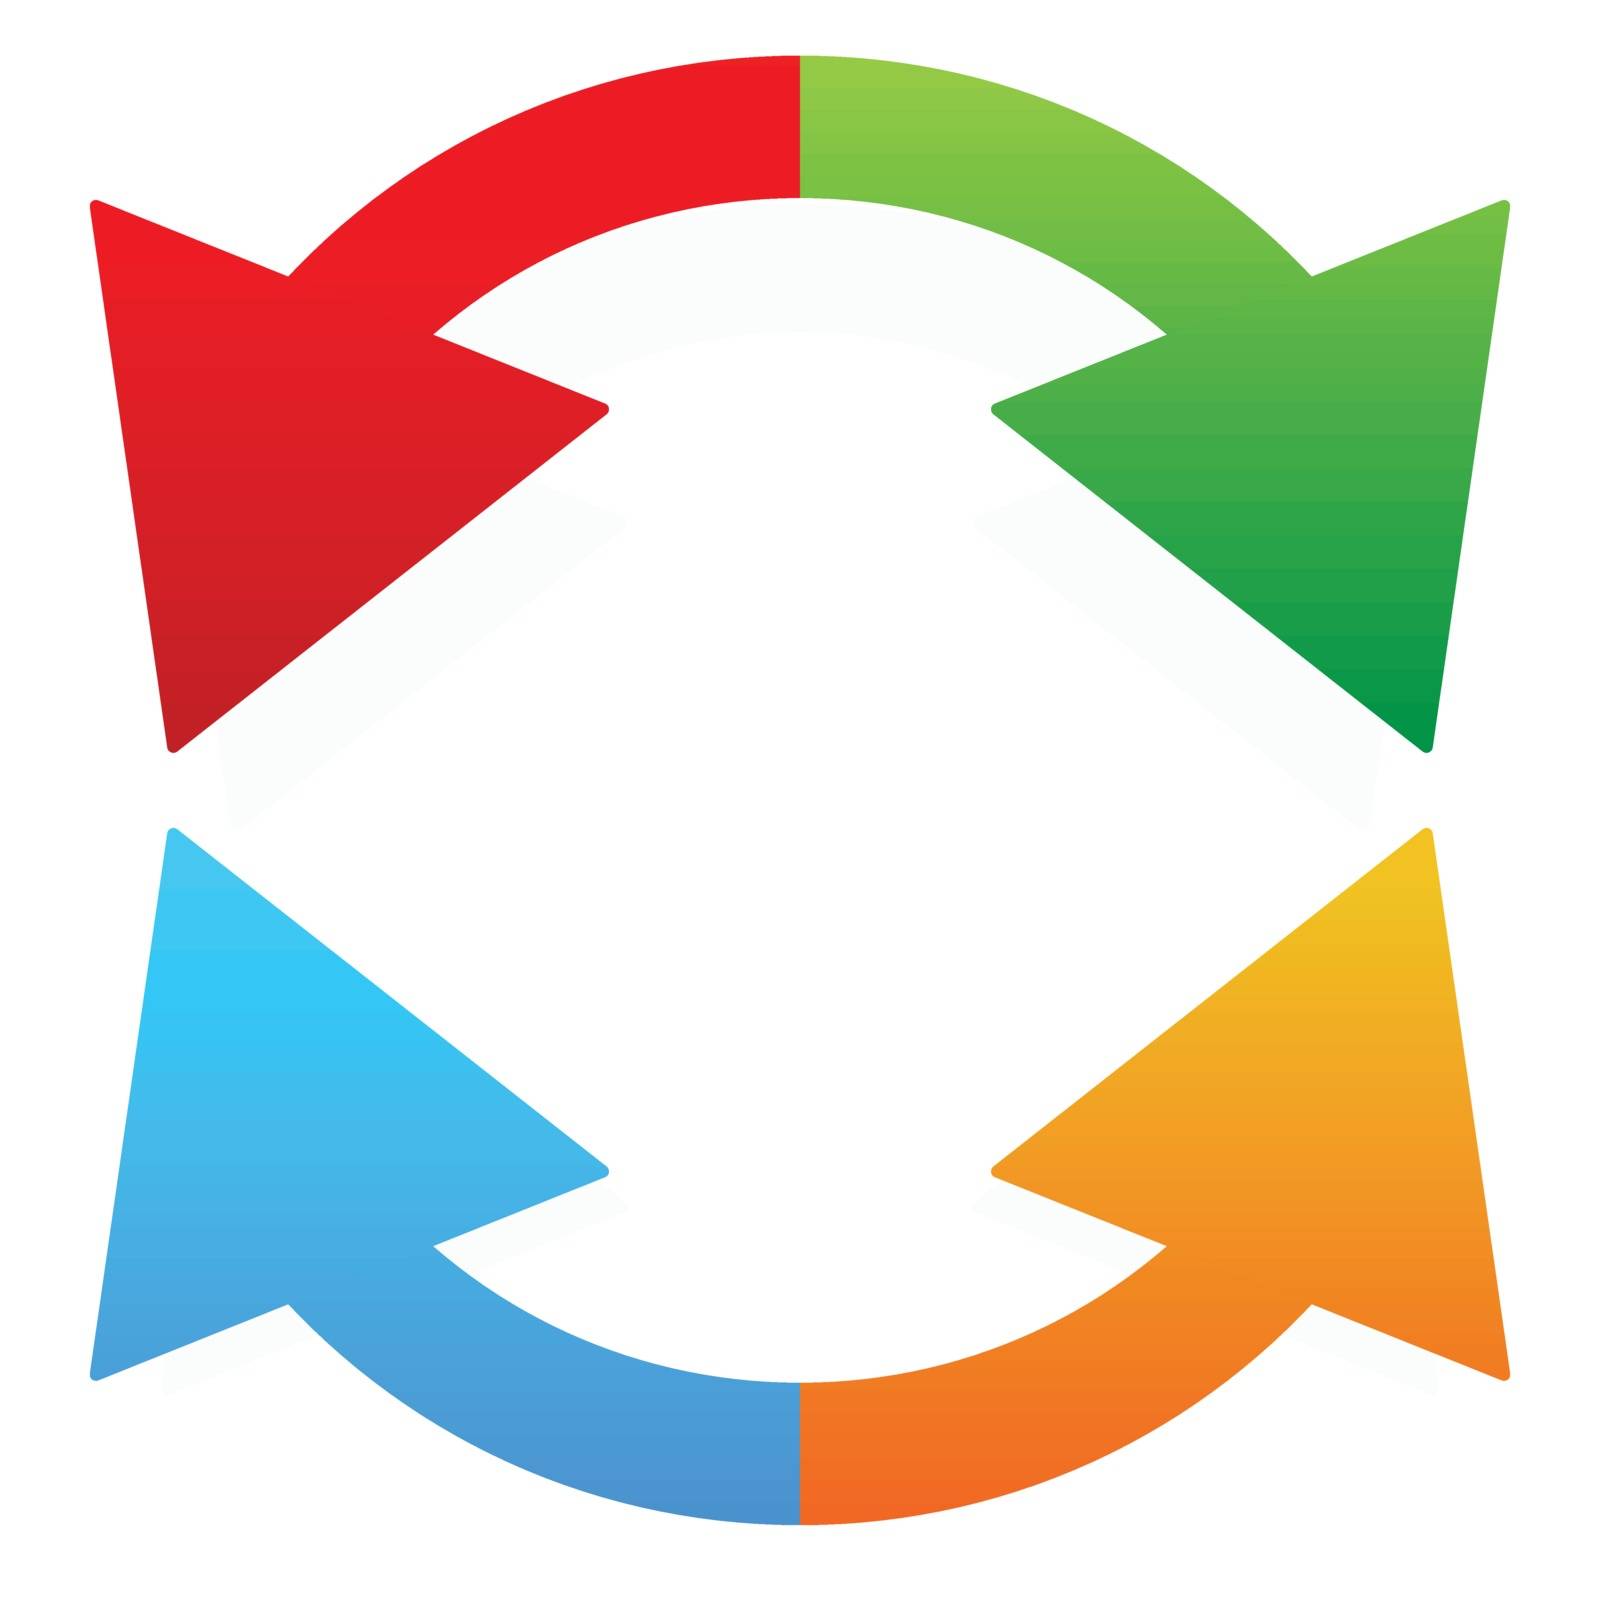 Circular, rotating arrows around on white. Colorful graphics.